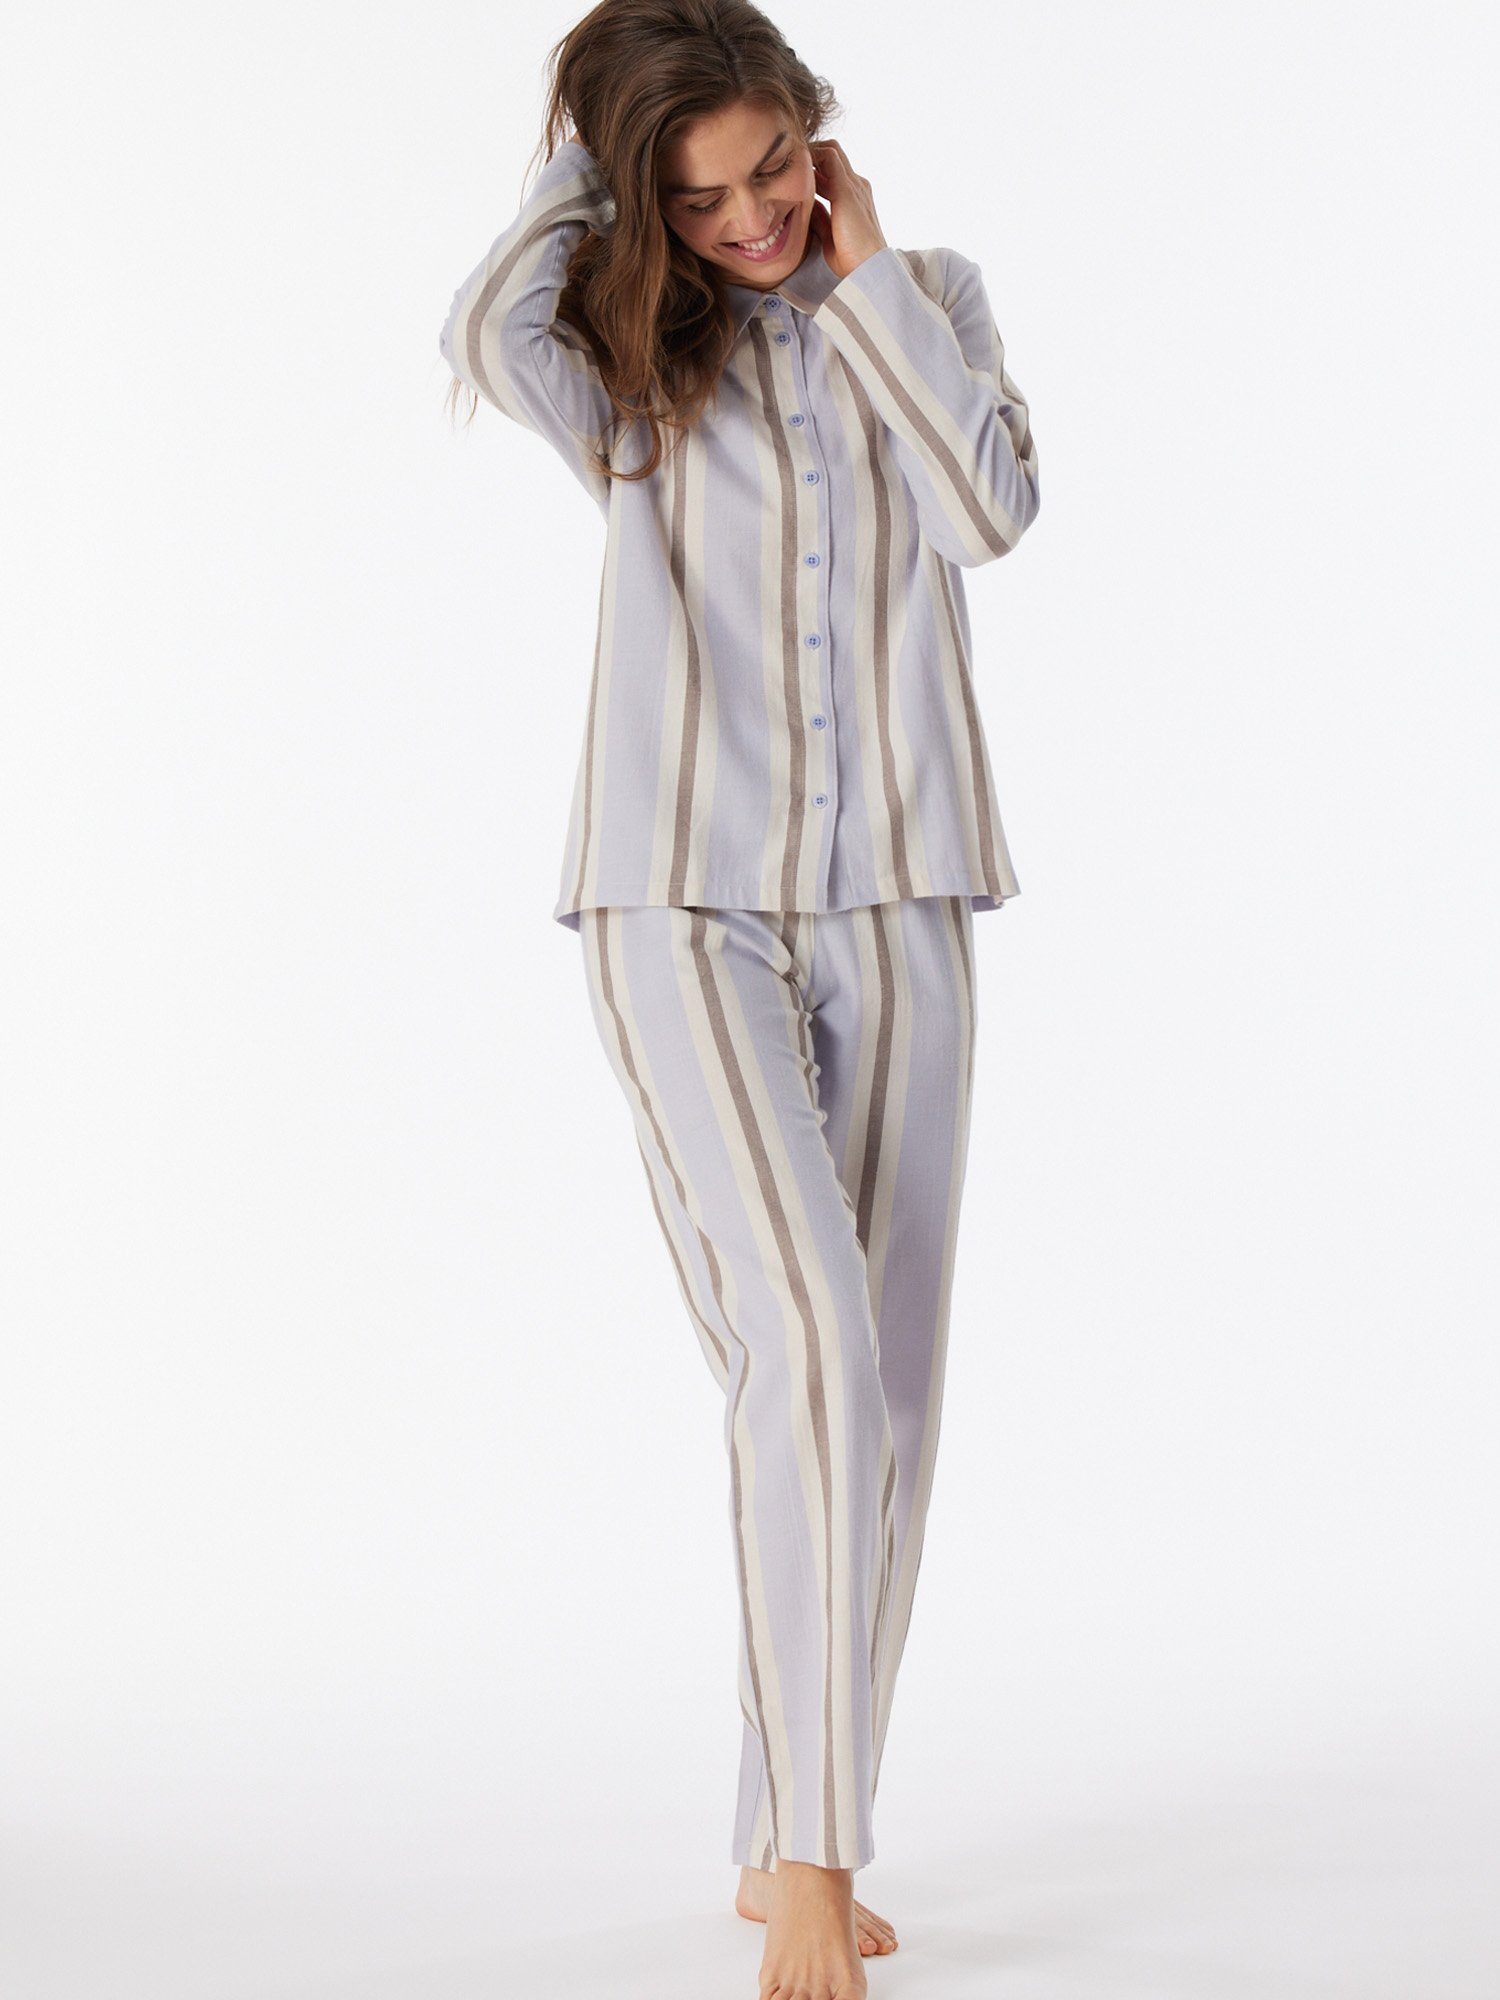 Pyjama flieder pyjama Selected schlafanzug schlafmode Schiesser Premium